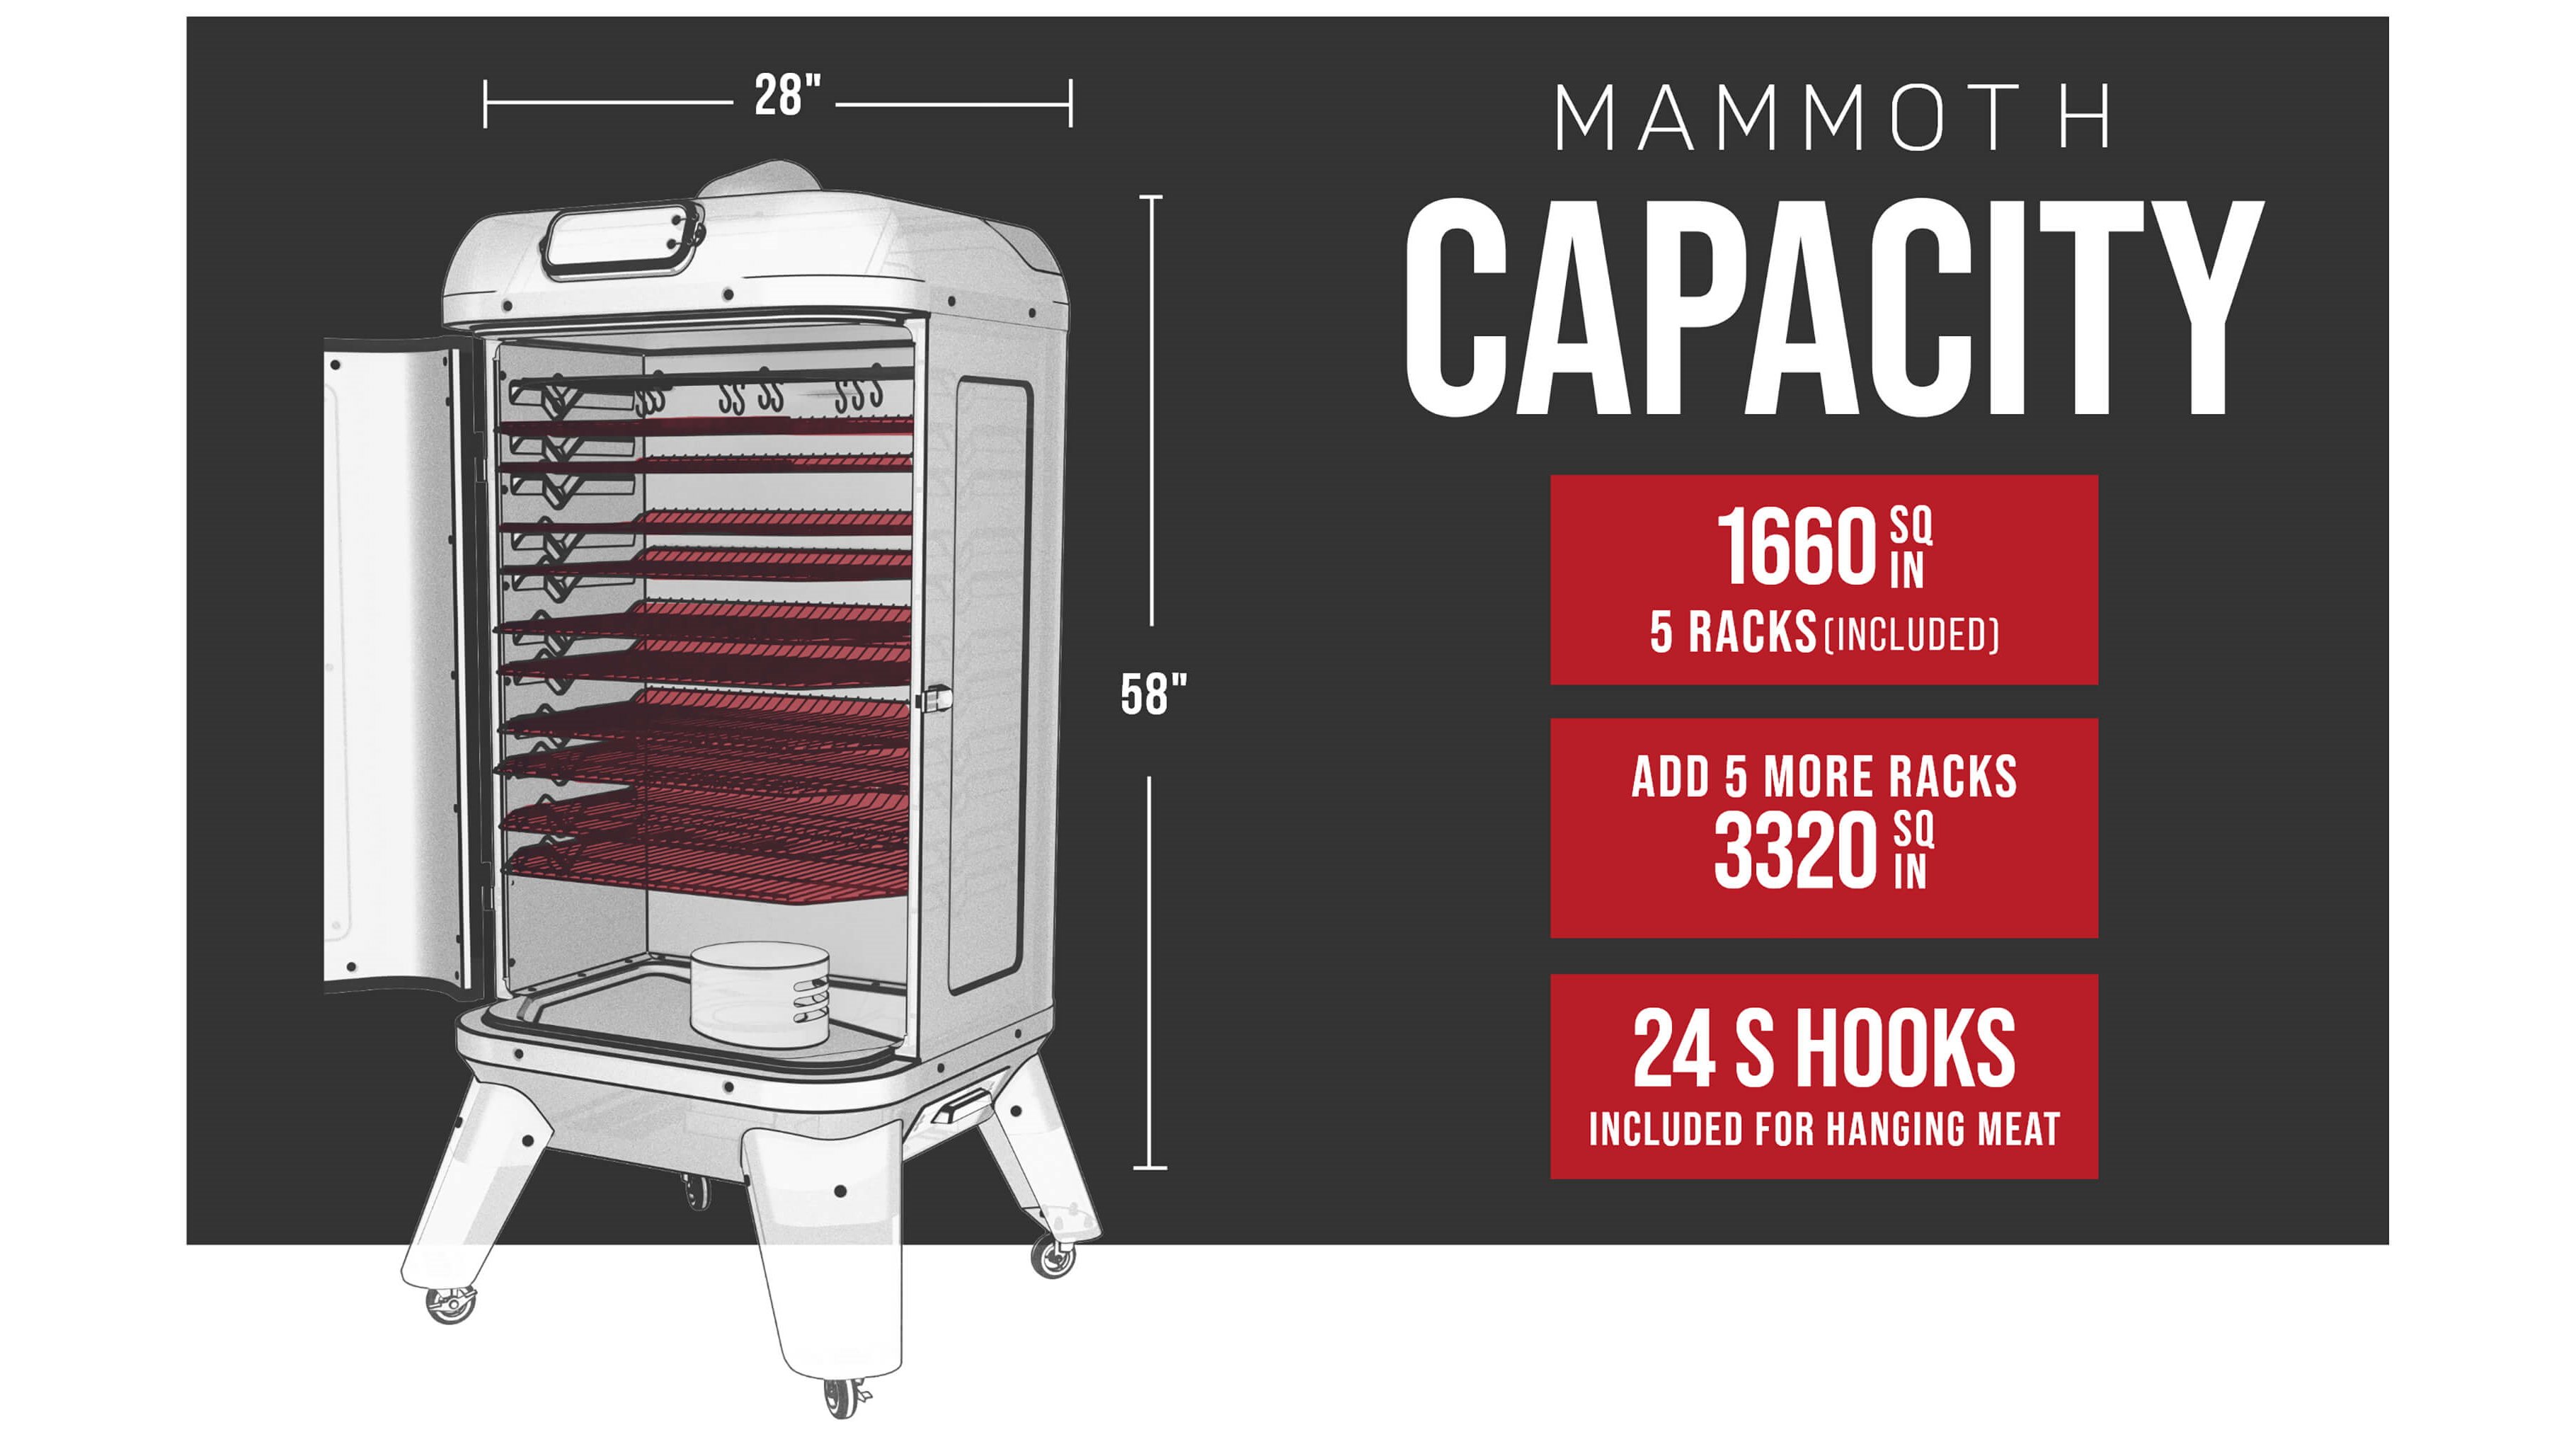 Mammoth Capacity, 1660 square inches, 5 racks, 24 S hooks